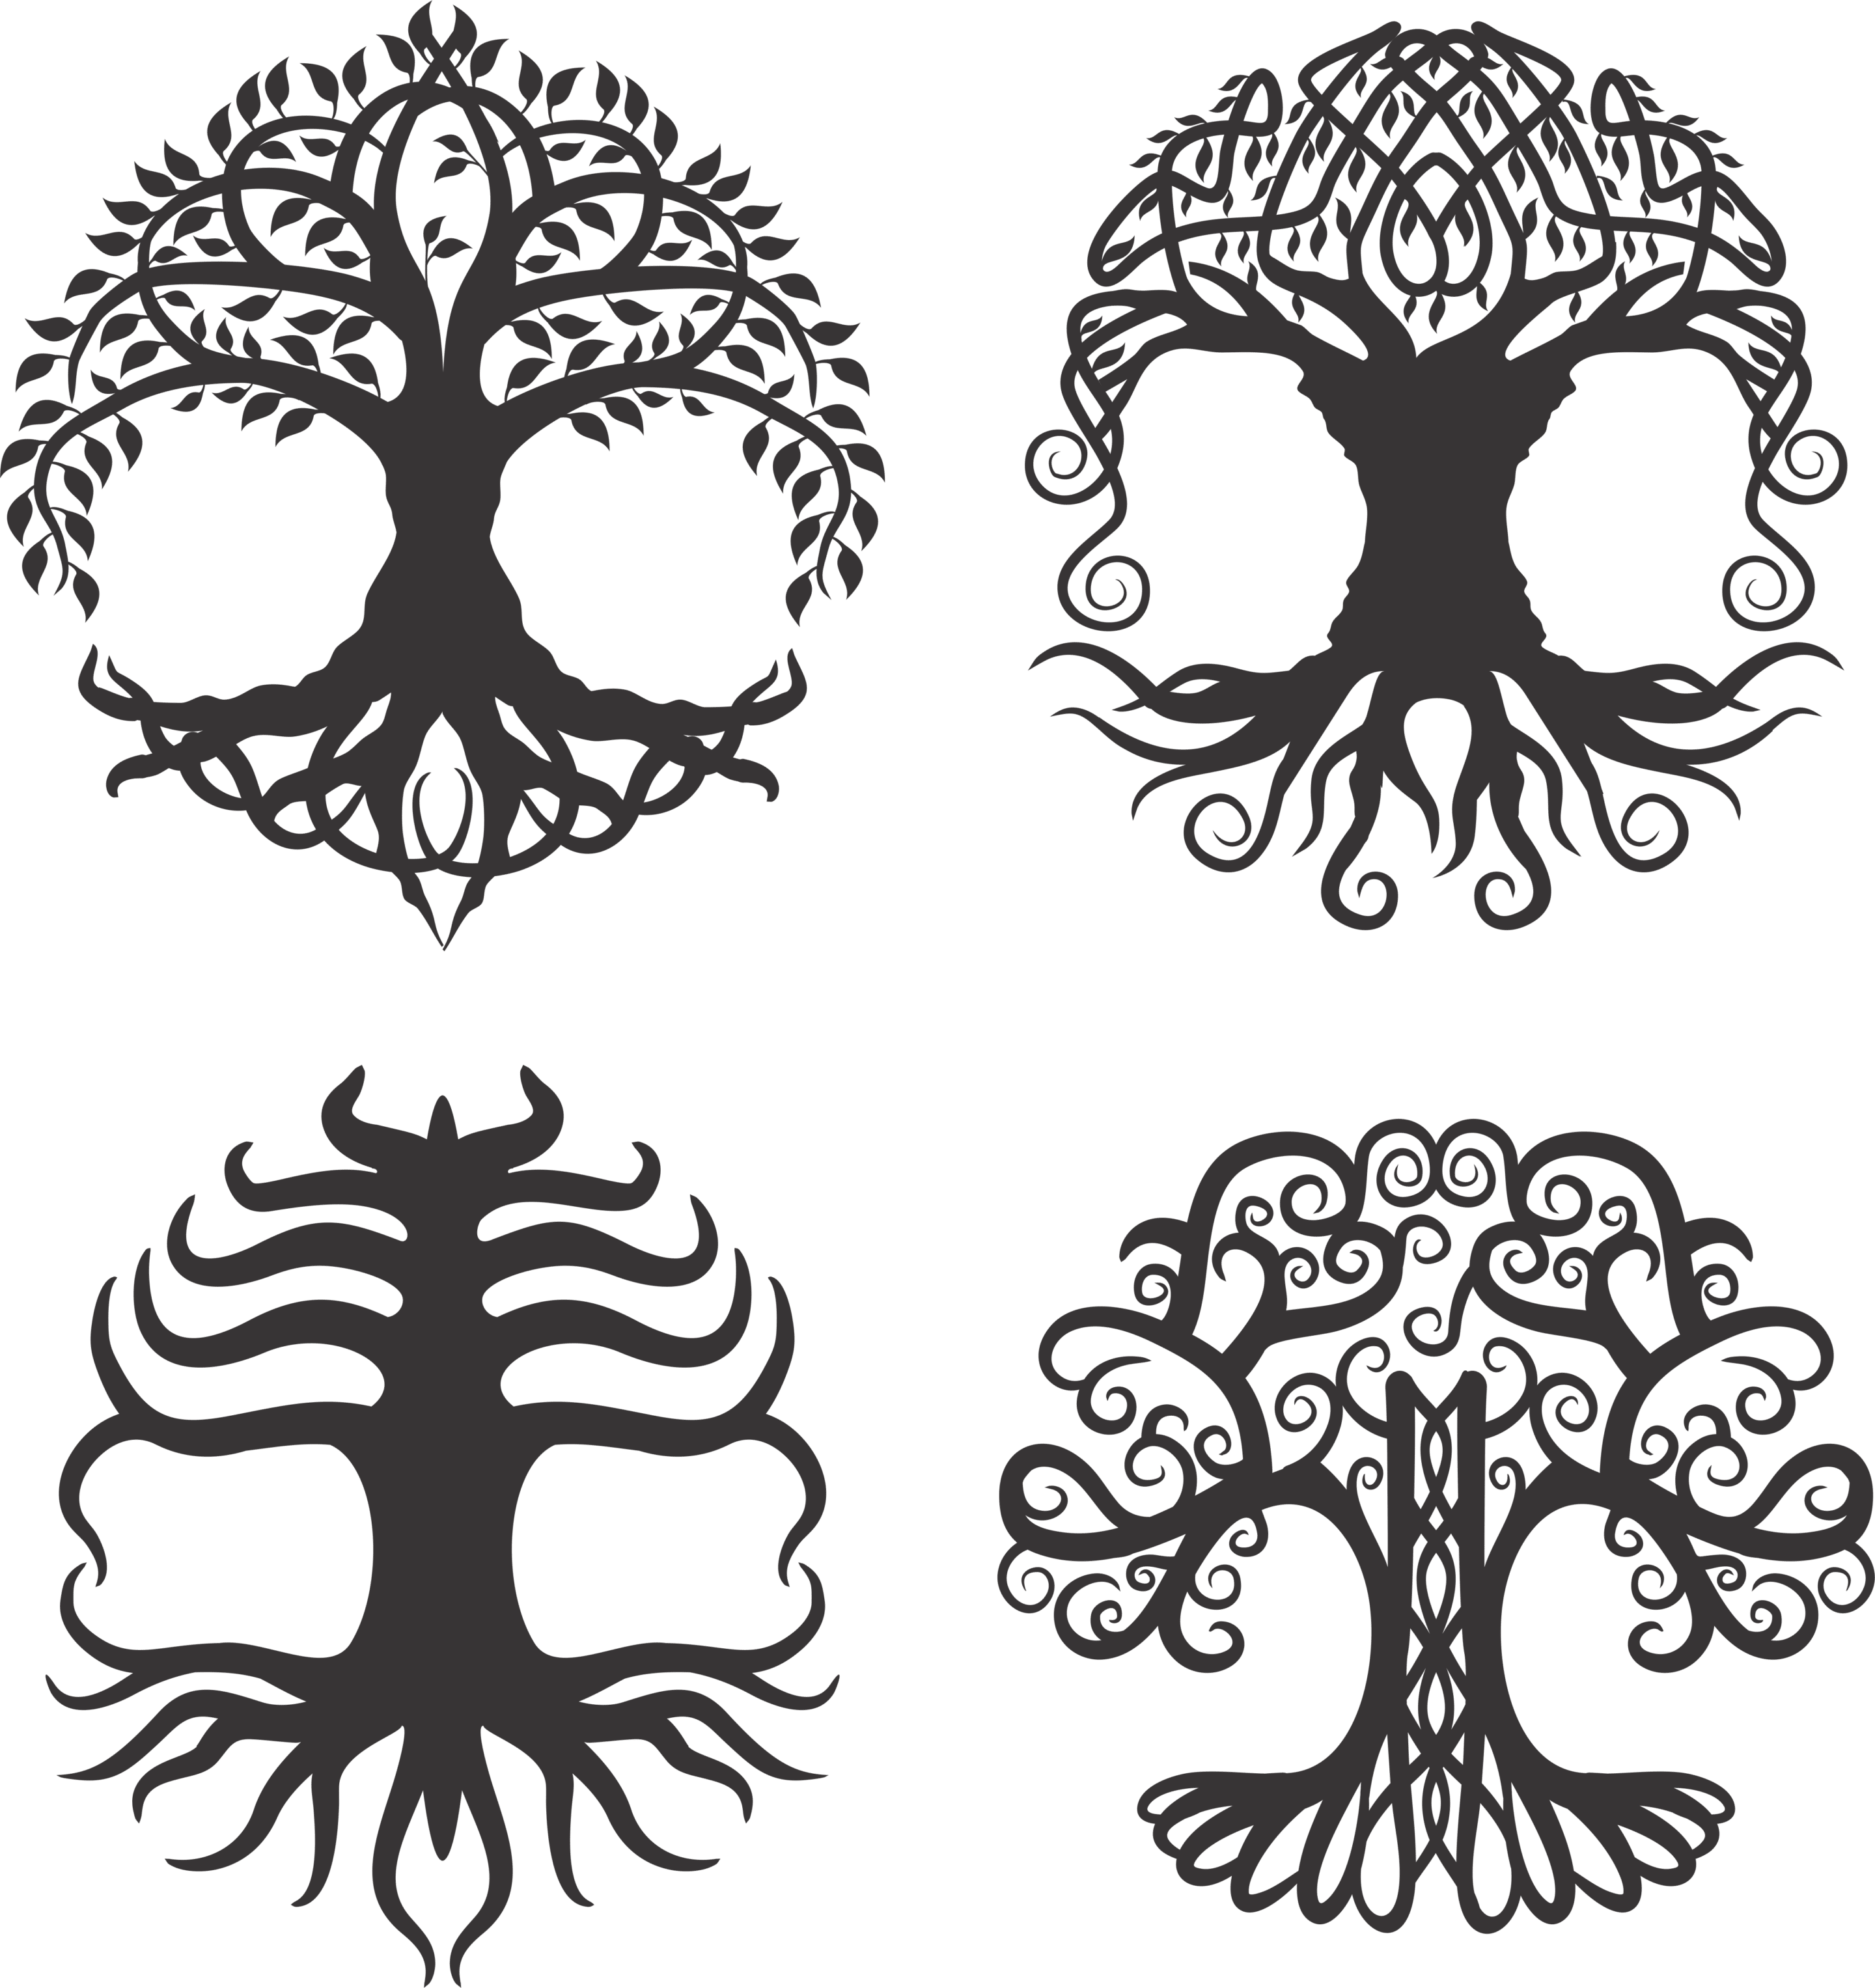 Diseños de árboles con raíces 1 - Stanser